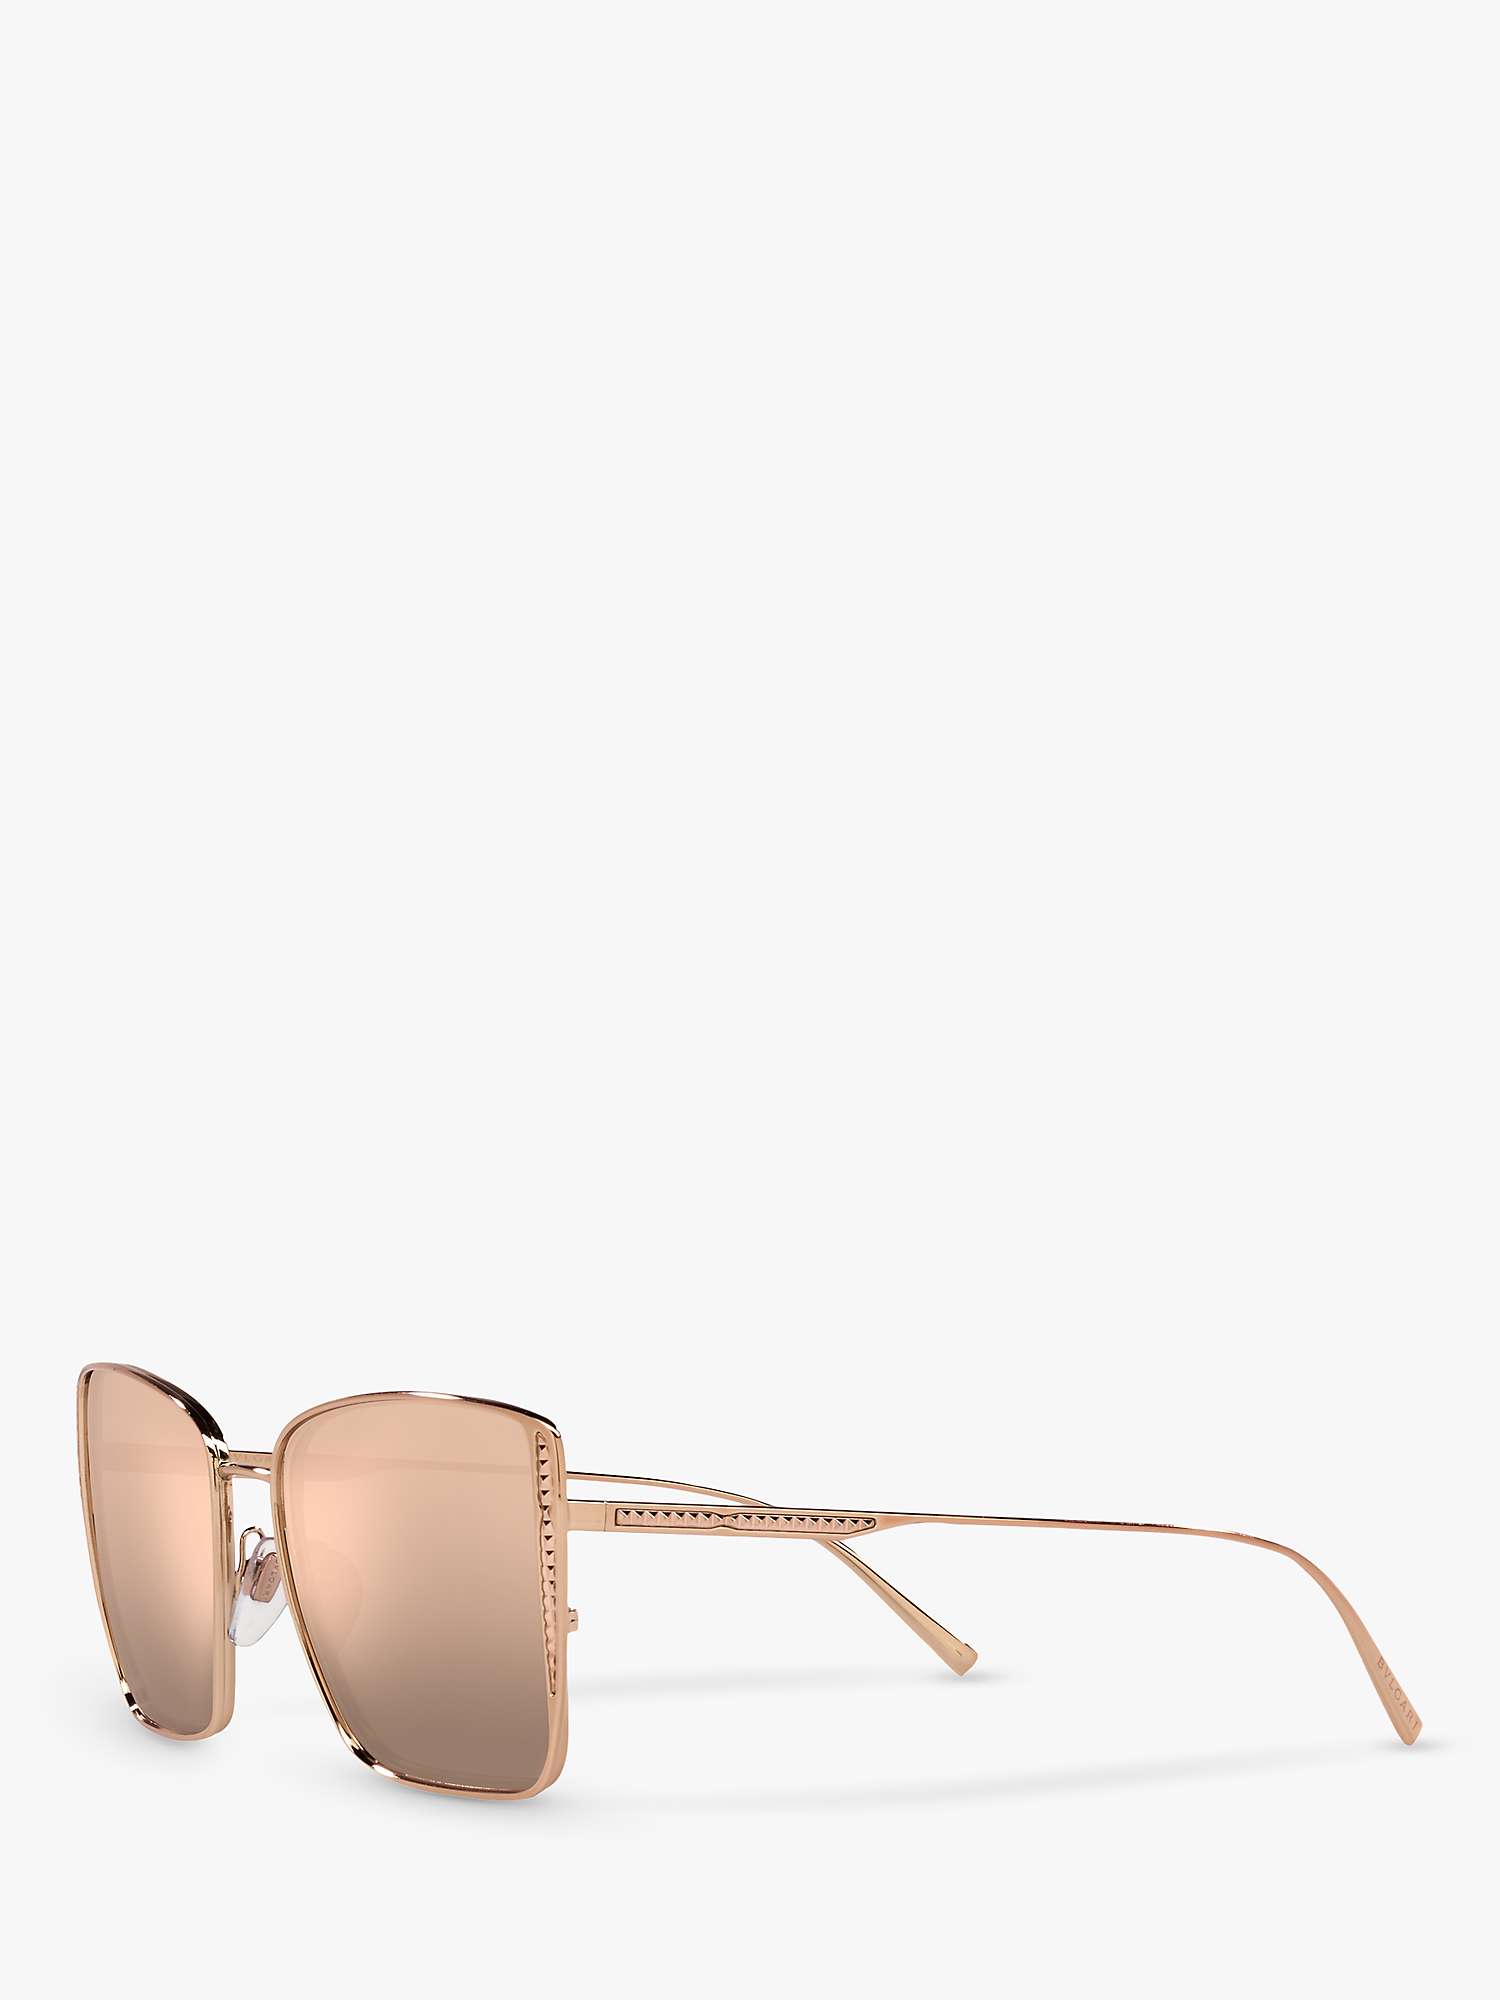 Buy BVLGARI BV6176 Women's Square Sunglasses, Pink Gold/Gold Mirror Online at johnlewis.com